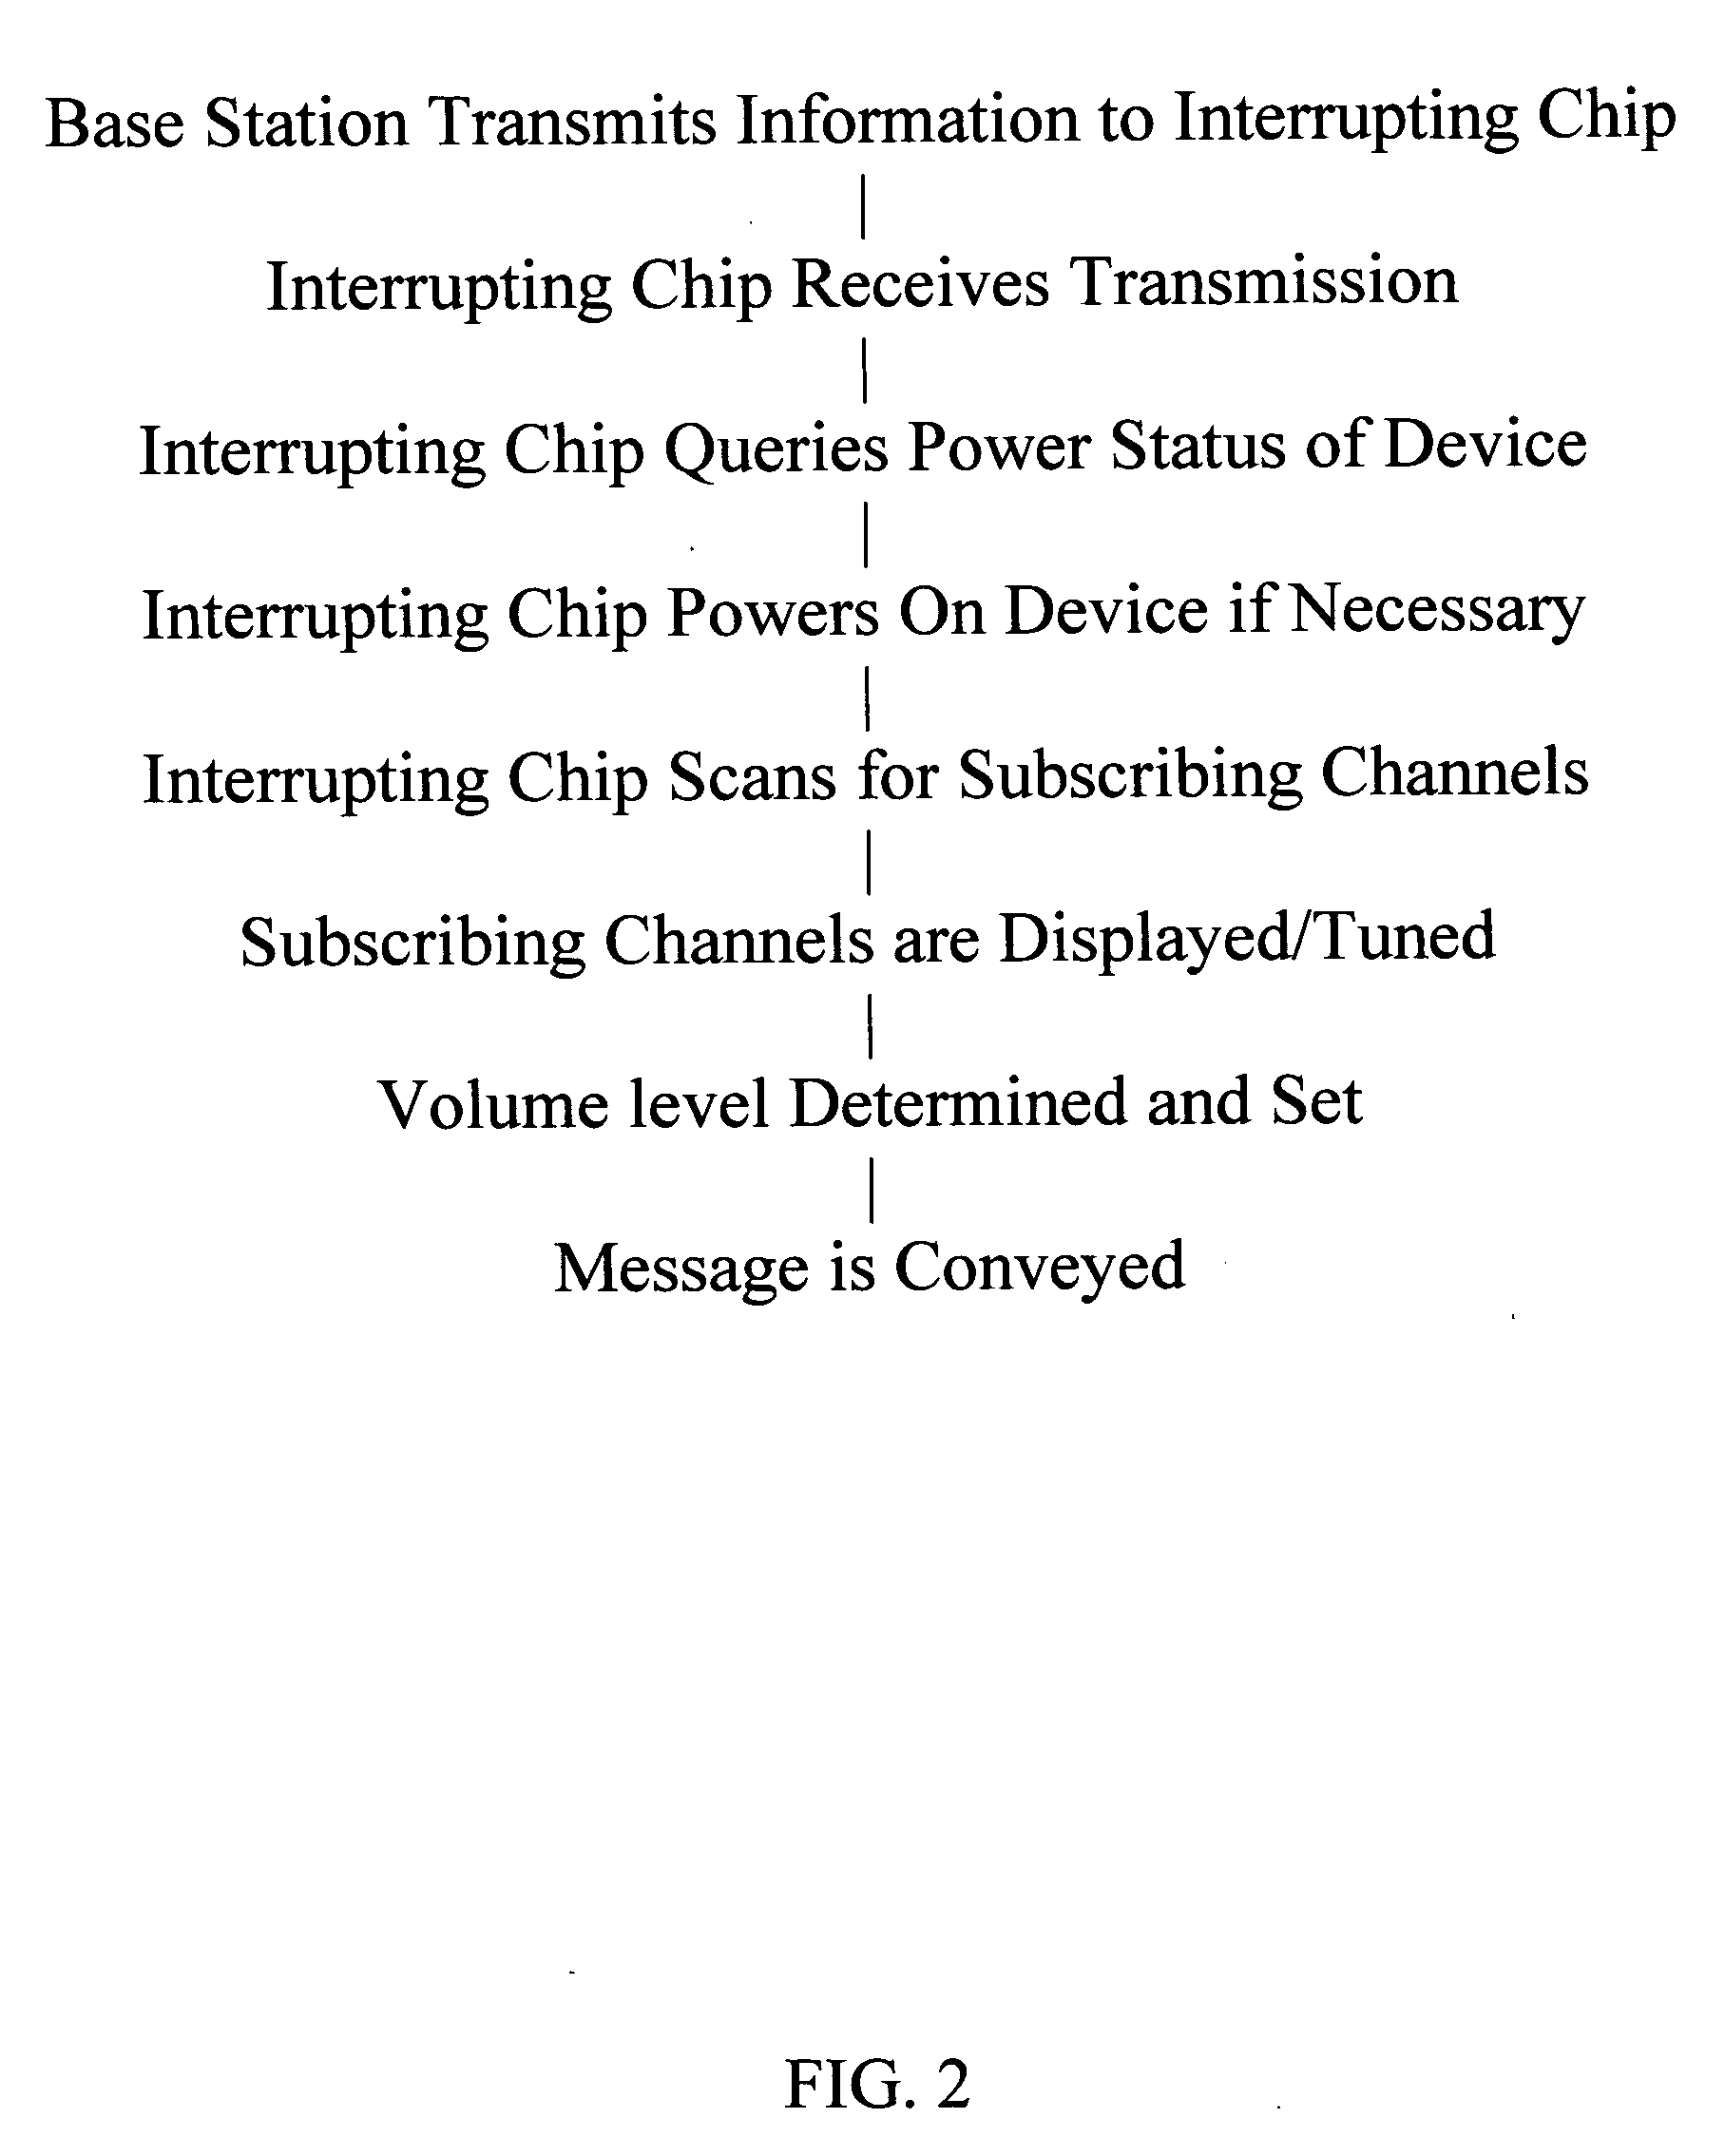 Interrupting chip